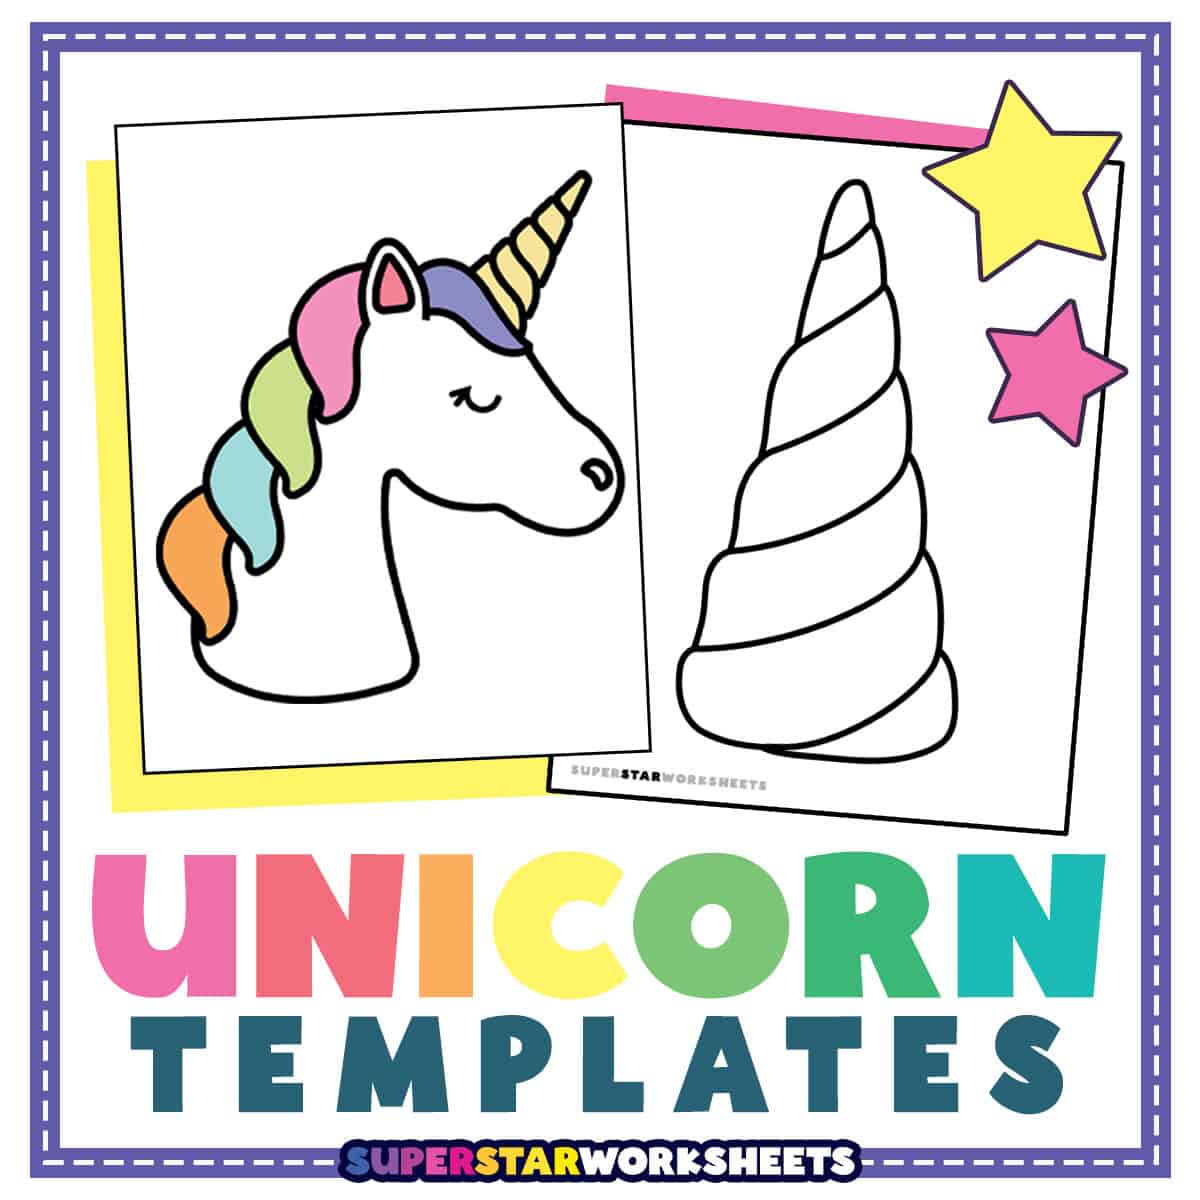 Unicorn template